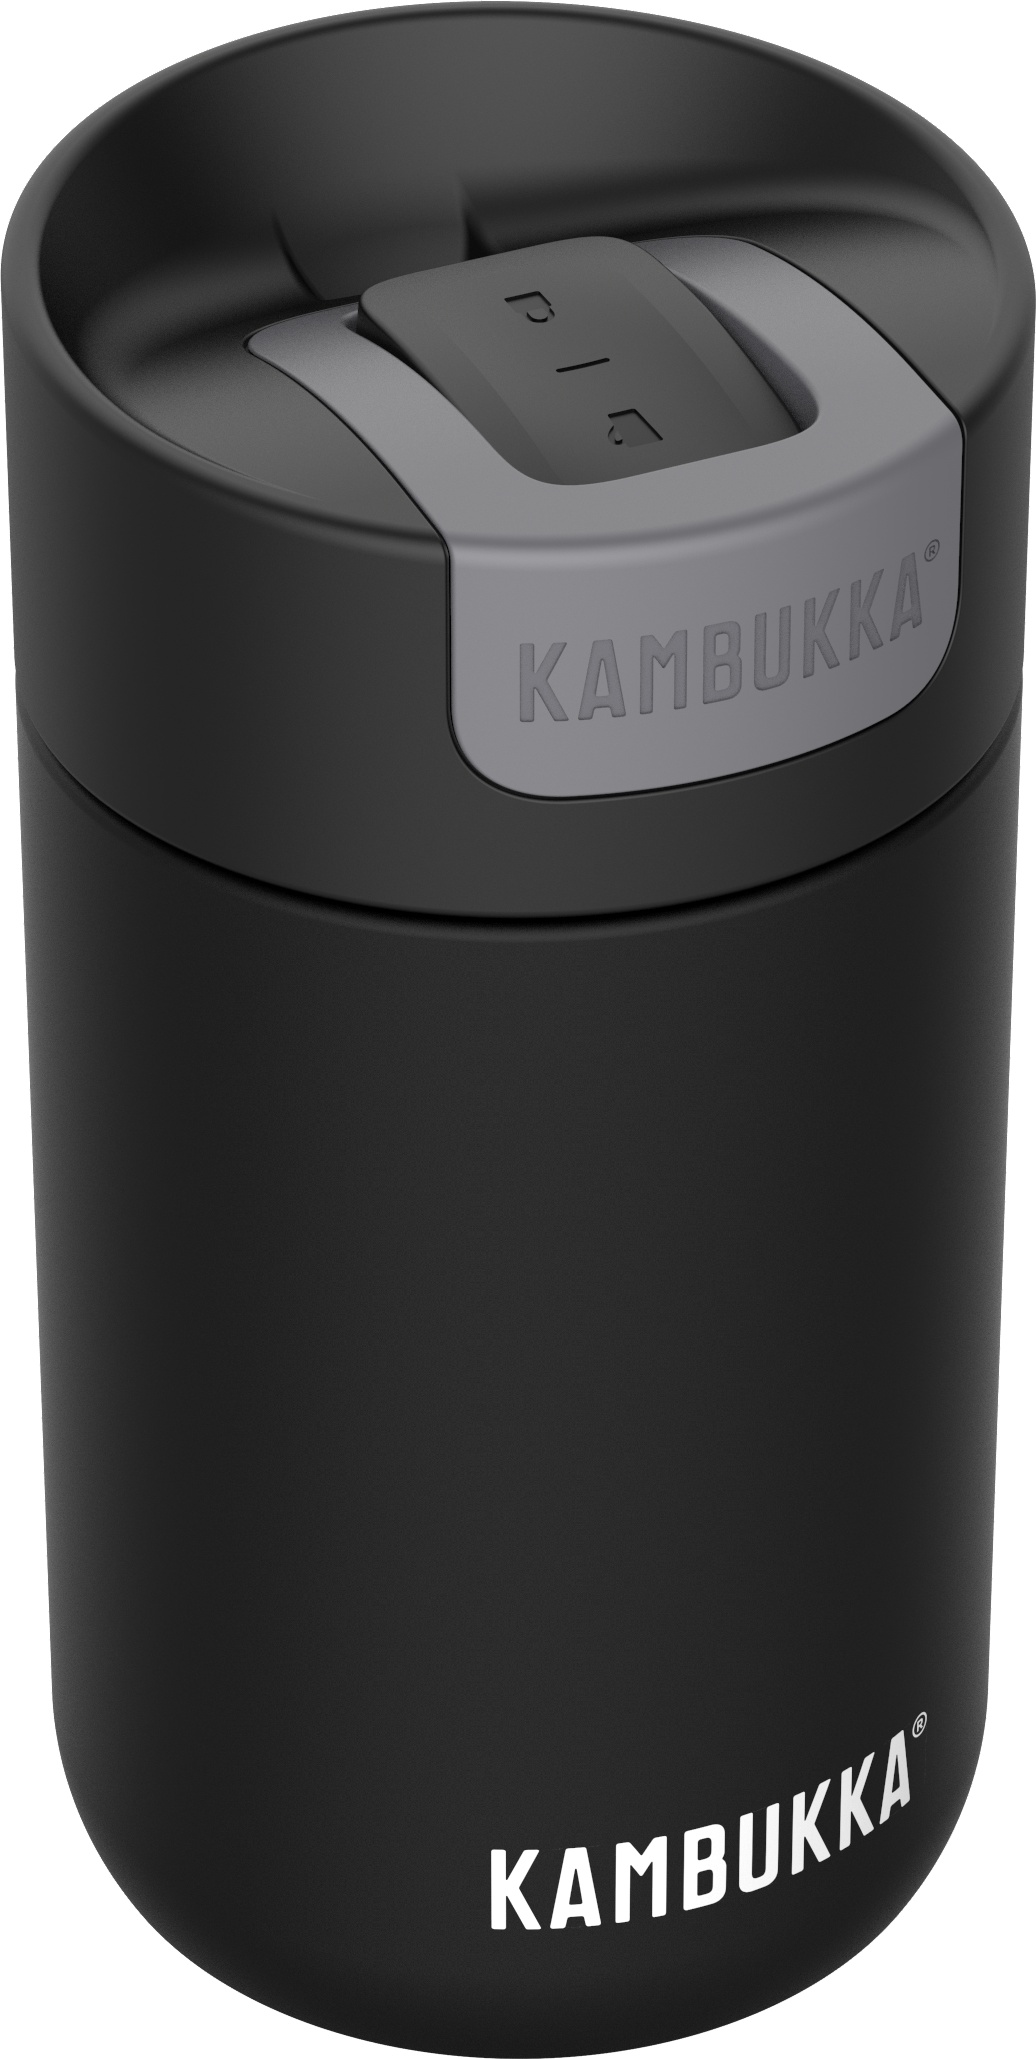 Cana termos Kambukka Olympus cu capac Switch inox 300ml Jet Black Kambukka